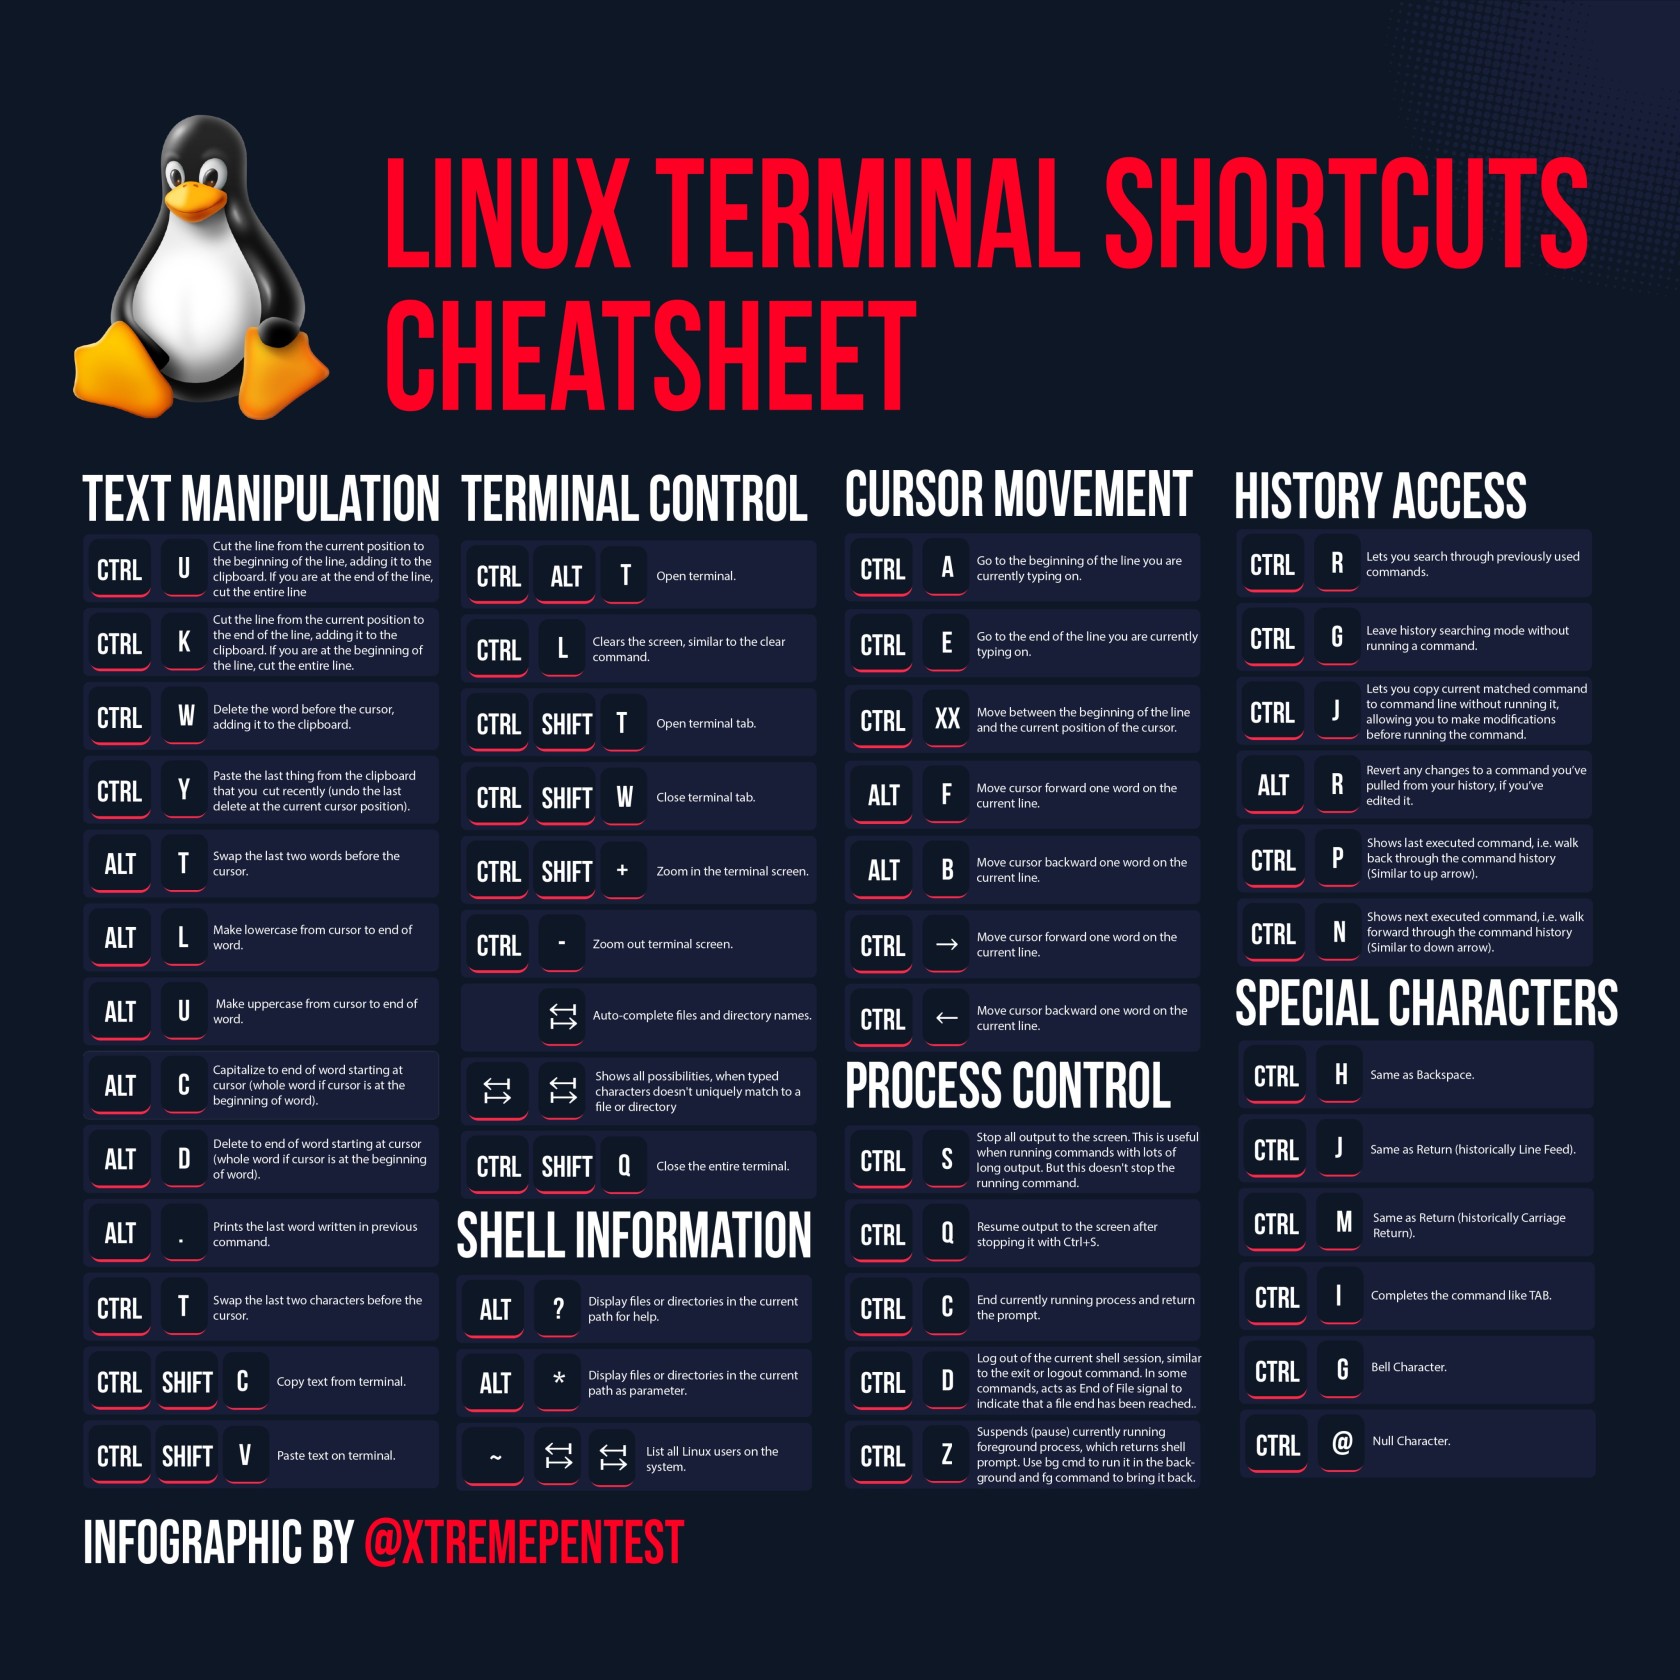 Linux_terminal_shortcuts.jpeg